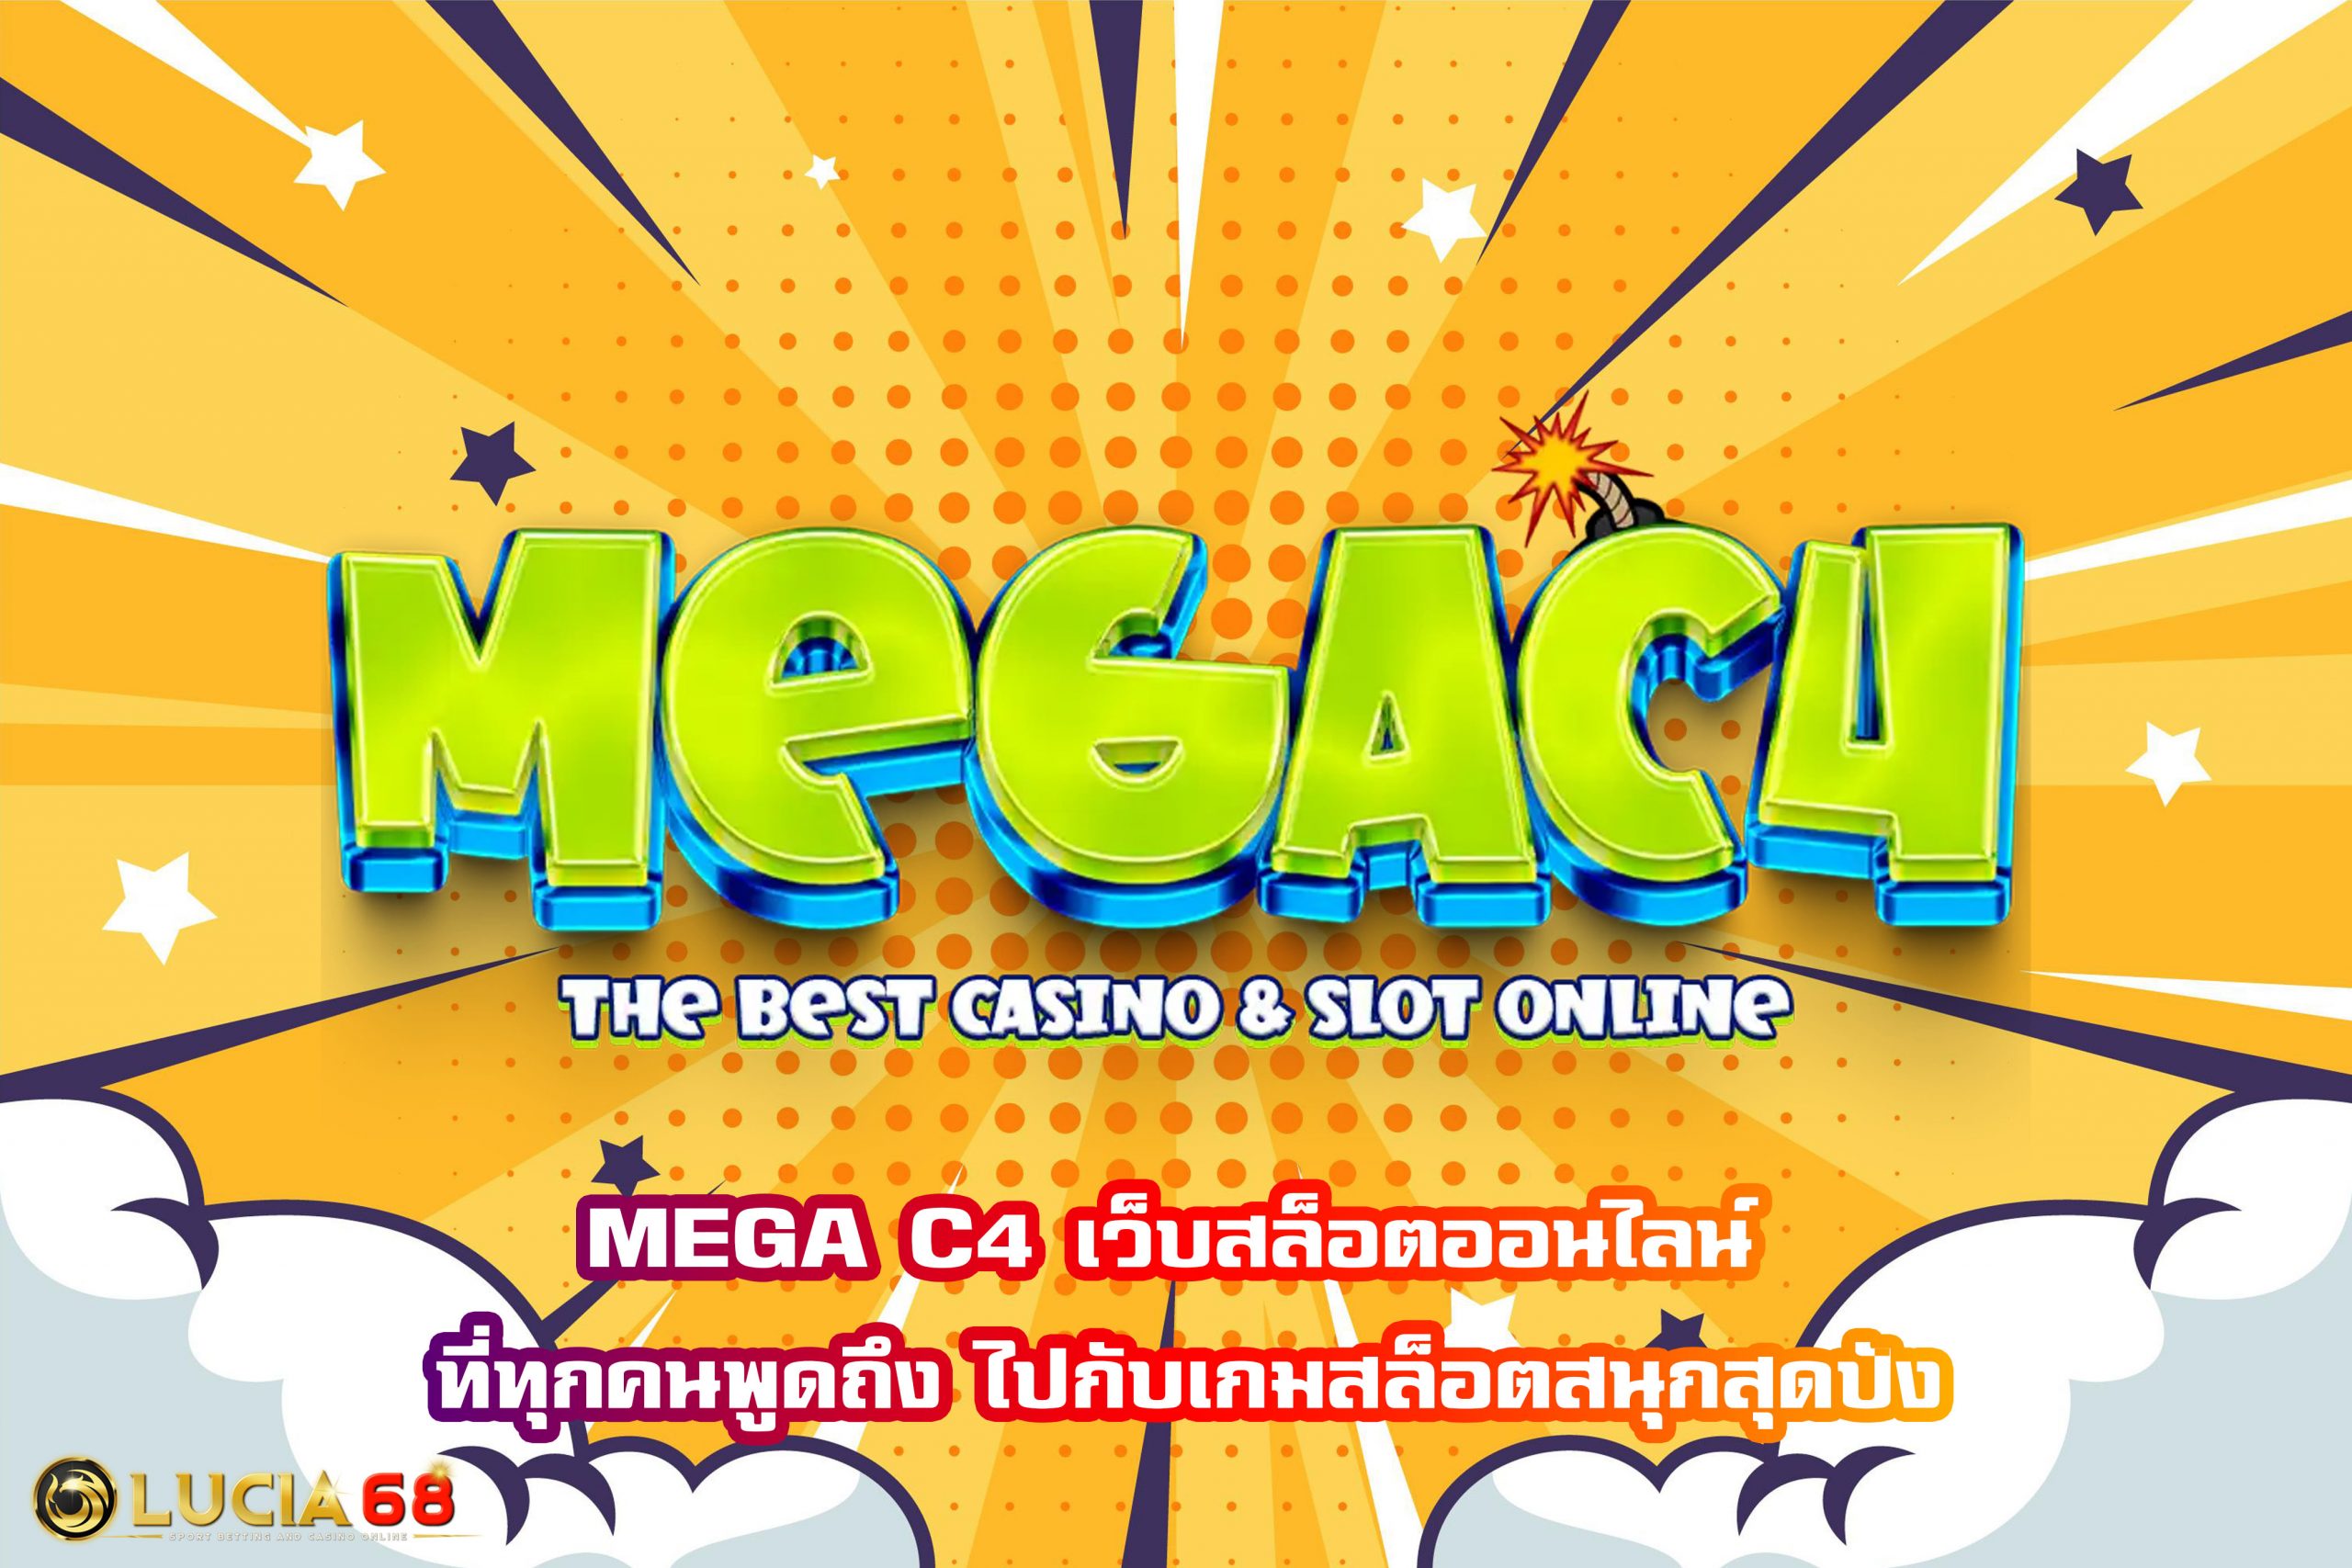 MEGA C4 เว็บสล็อตออนไลน์ ที่ทุกคนพูดถึง ไปกับเกมสล็อตสนุกสุดปัง